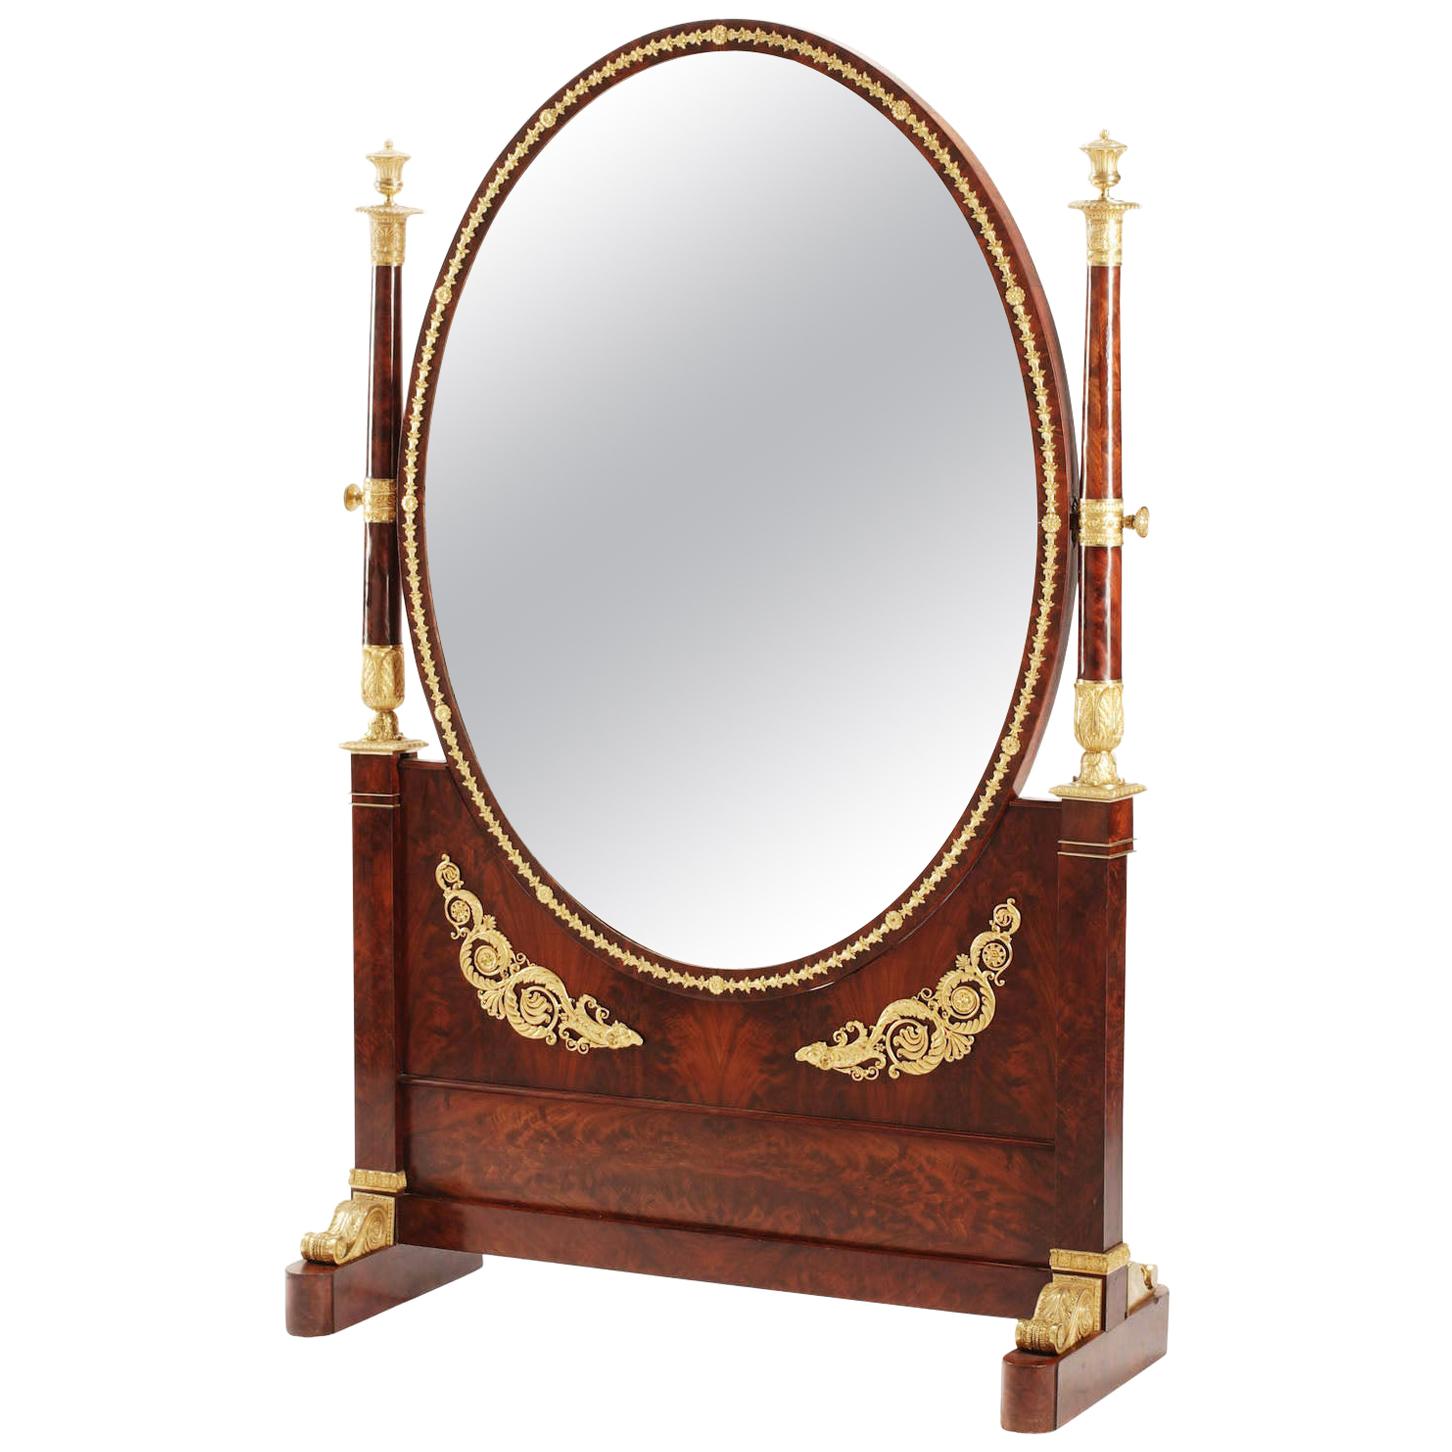 French Napoleon III Empire Style Mahogany and Ormolu Mounted Cheval Mirror